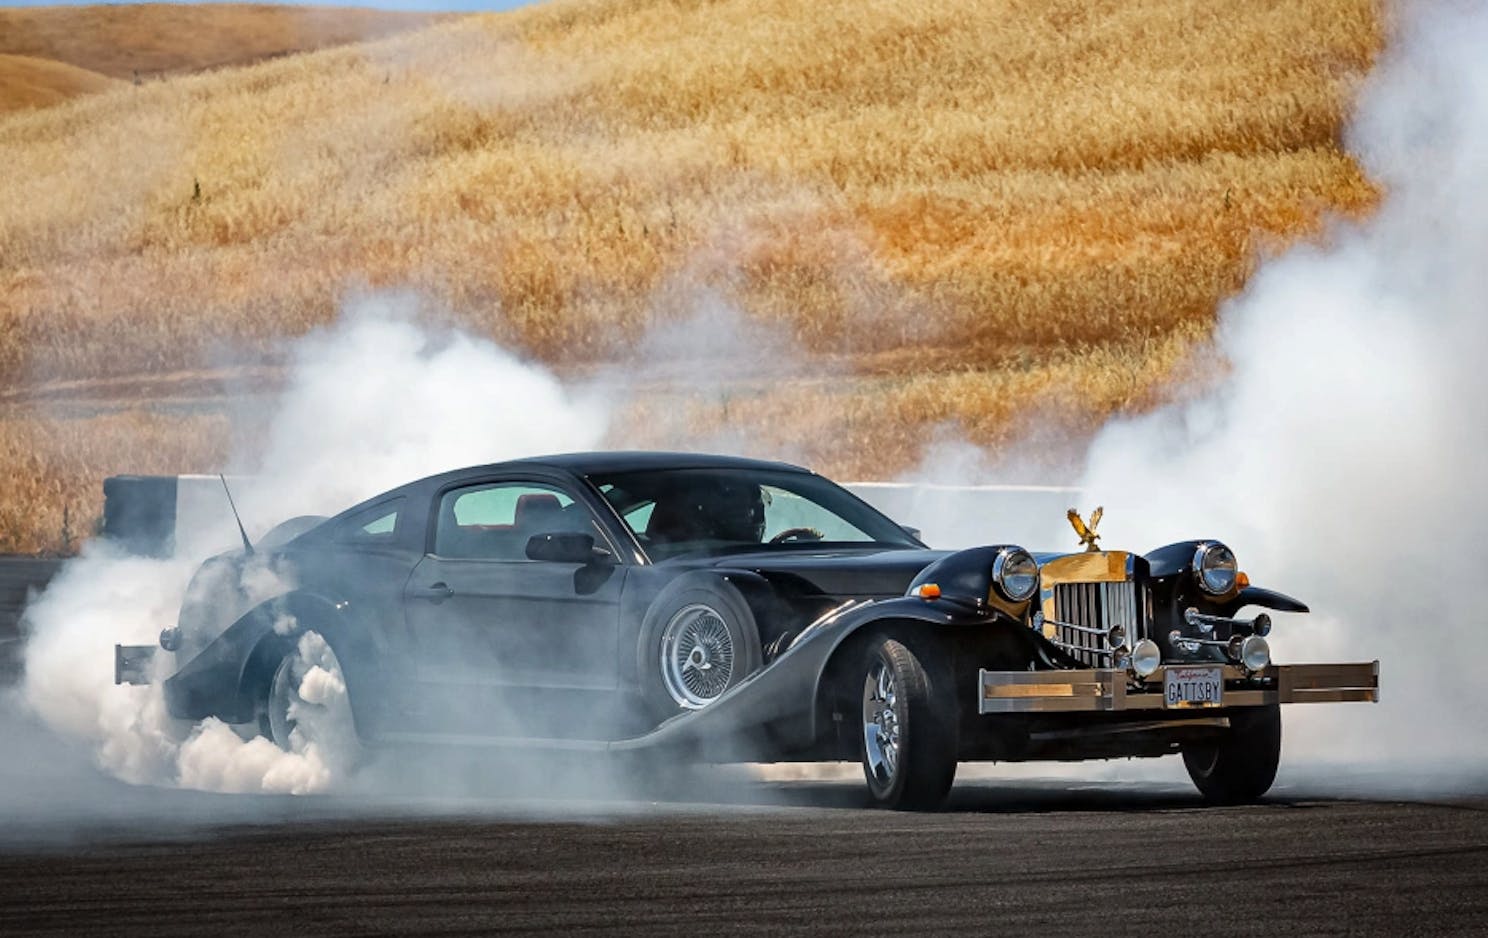 Hot Cars  Race car driving, Drift cars, Dream cars